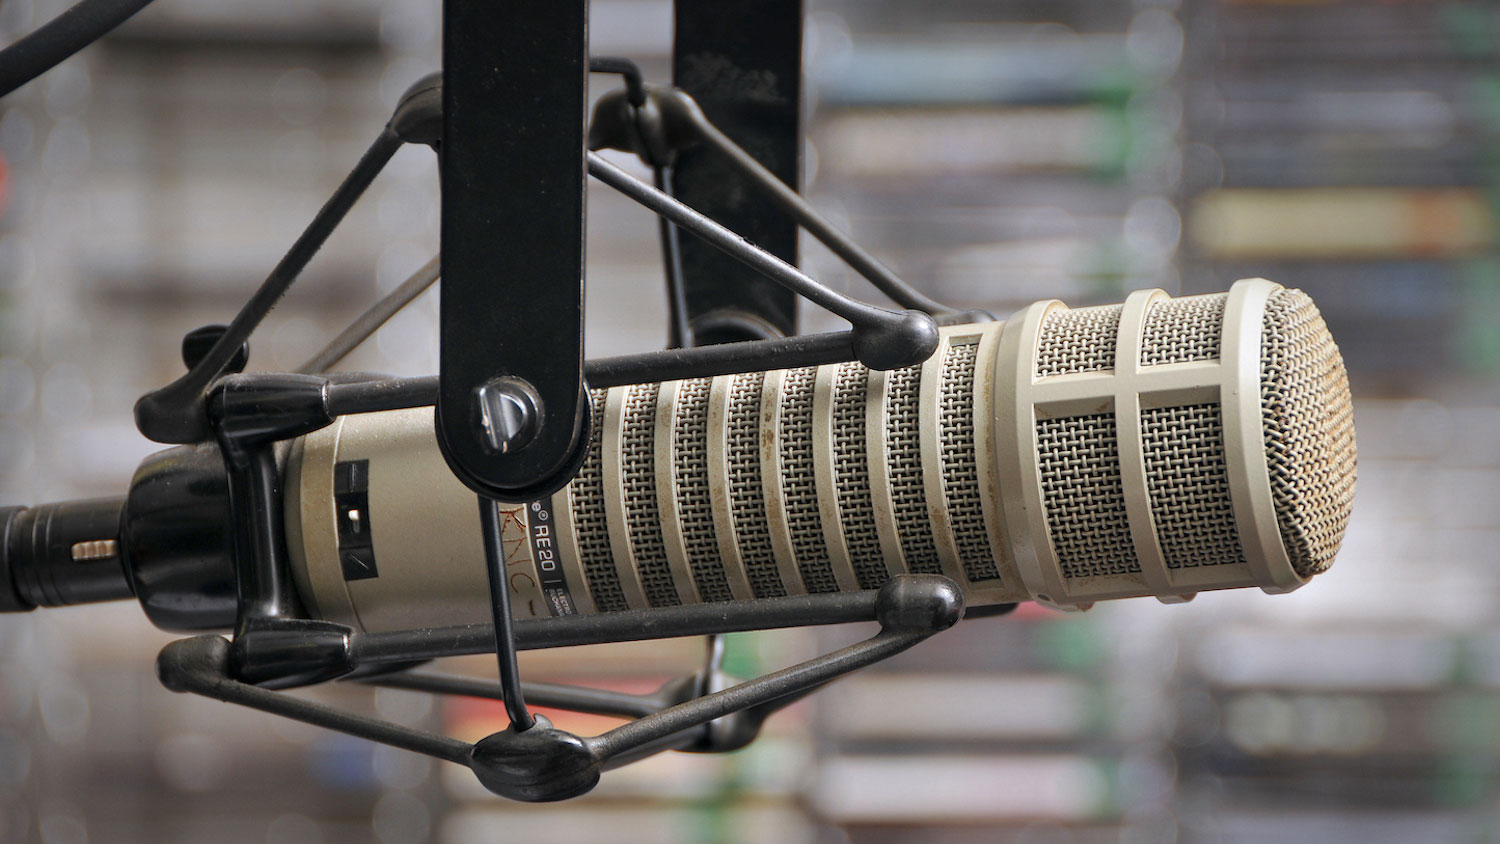 A close-up of a radio studio microphone